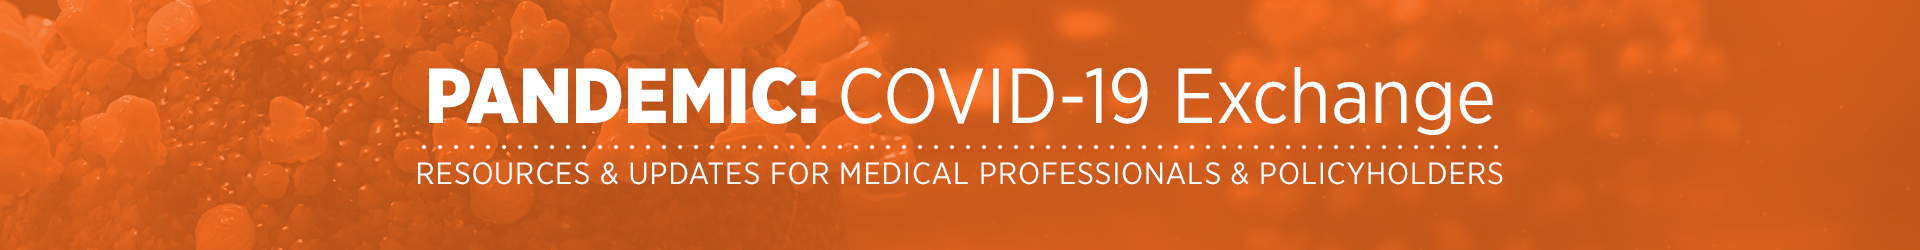 Pandemic: COVID-19 Exchange